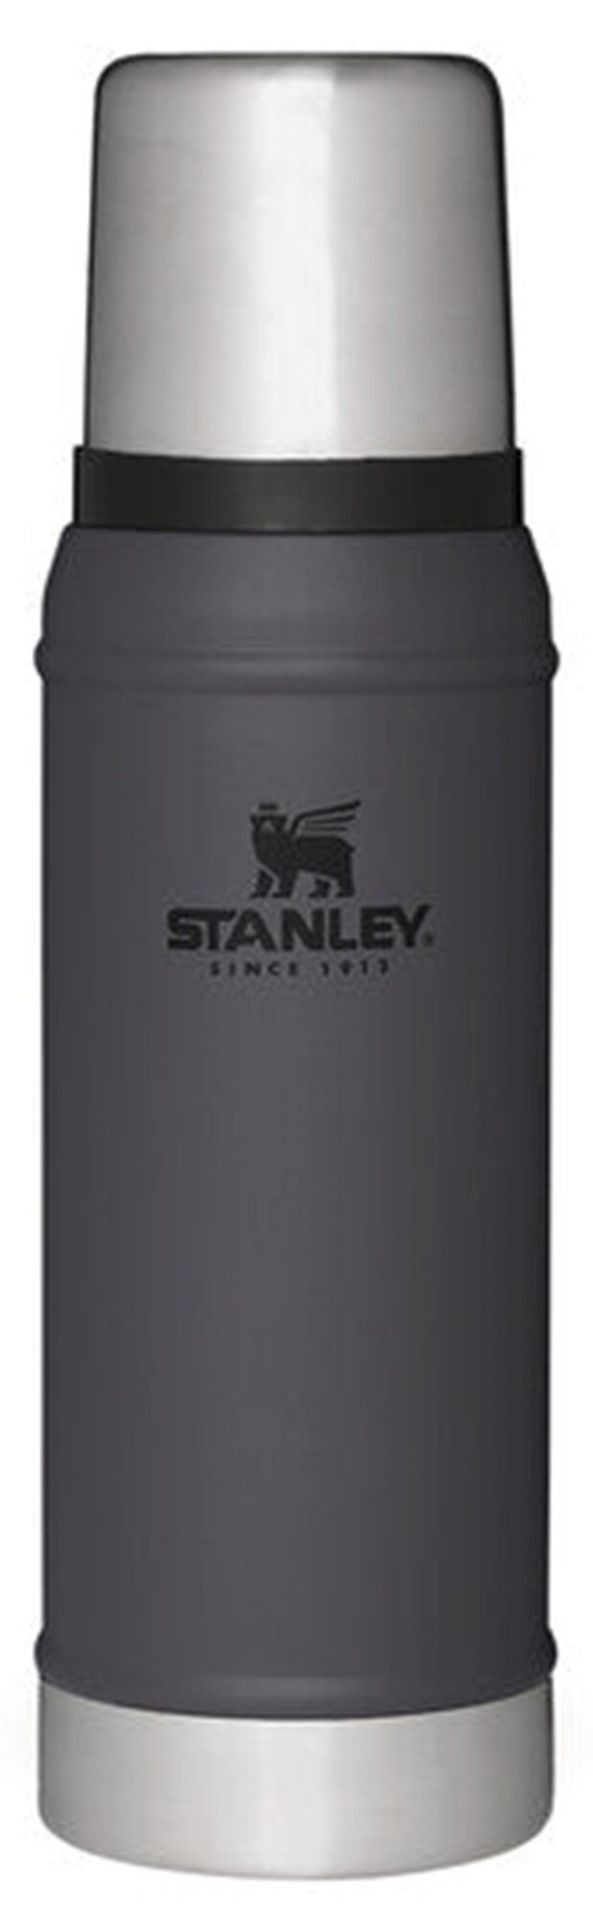 Stanley Klasik Vakumlu Paslanmaz Çelik Termos 0.75 LT 0,75 LT - Charcoal